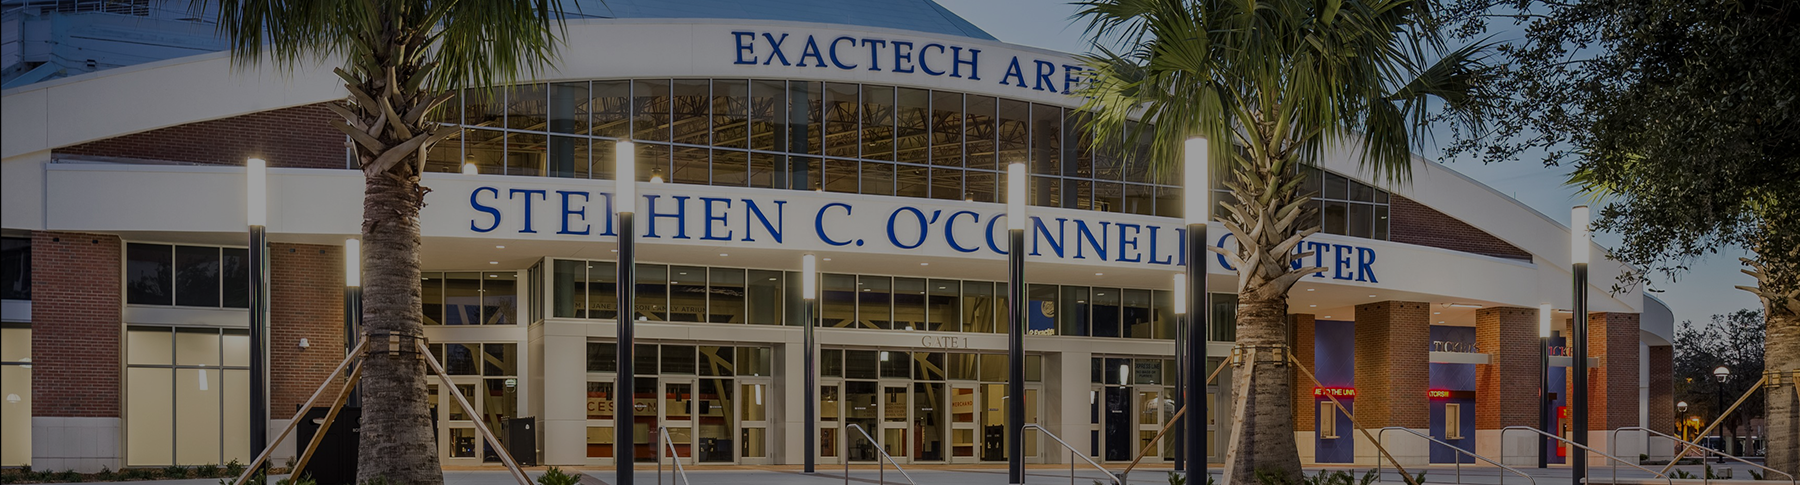 Exactech Arena at Stephen C. O'Connell Center - Florida Gators